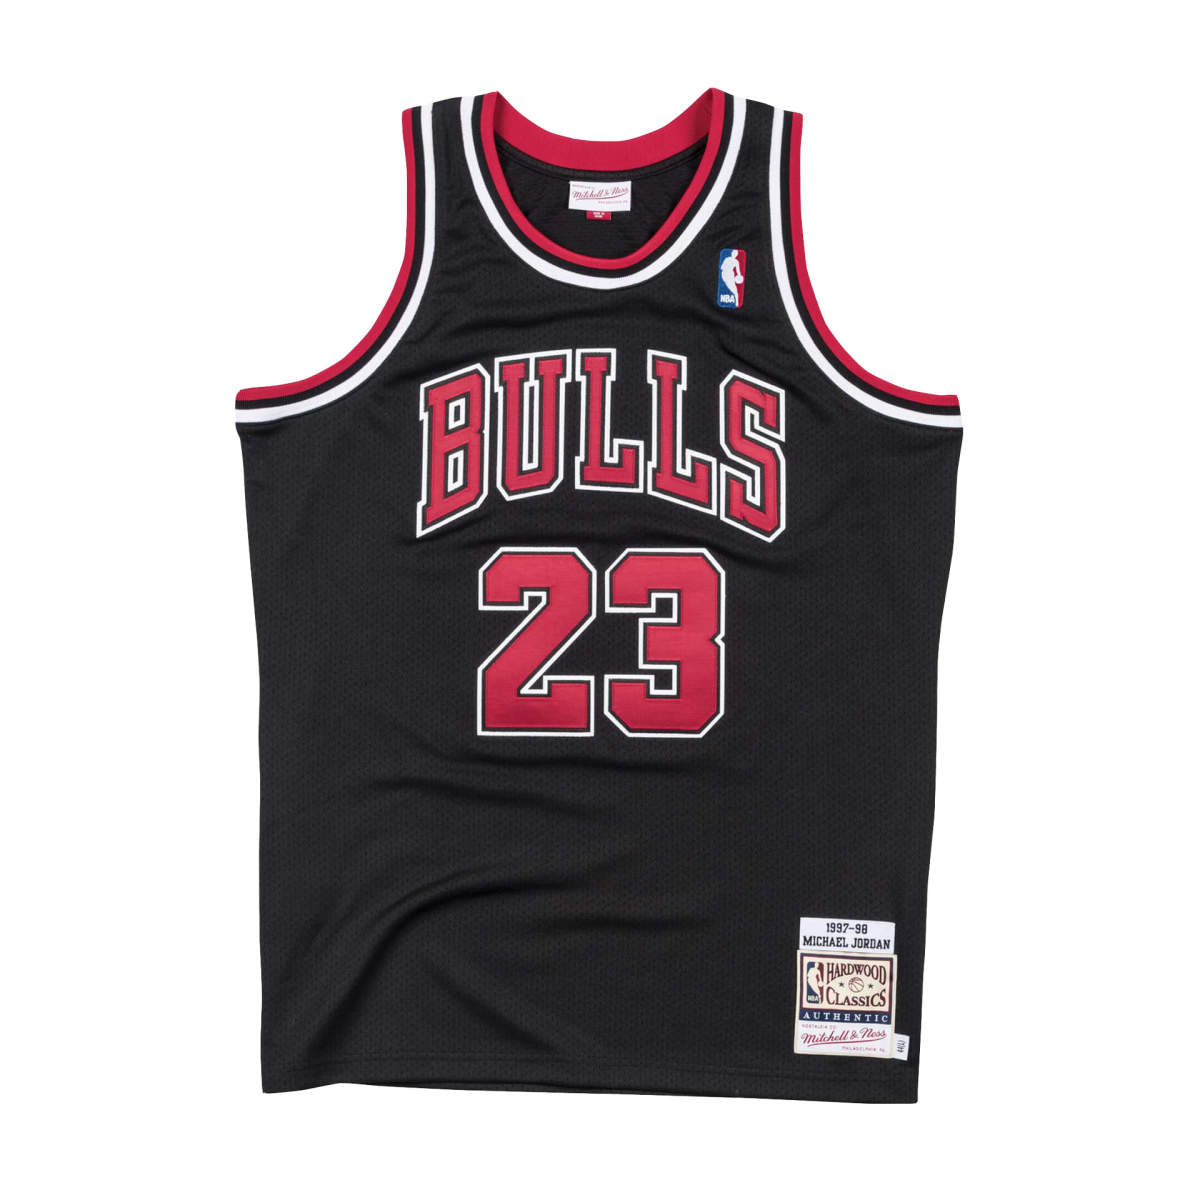 Chicago bulls alternate authentic jersey 1997-98 jordan